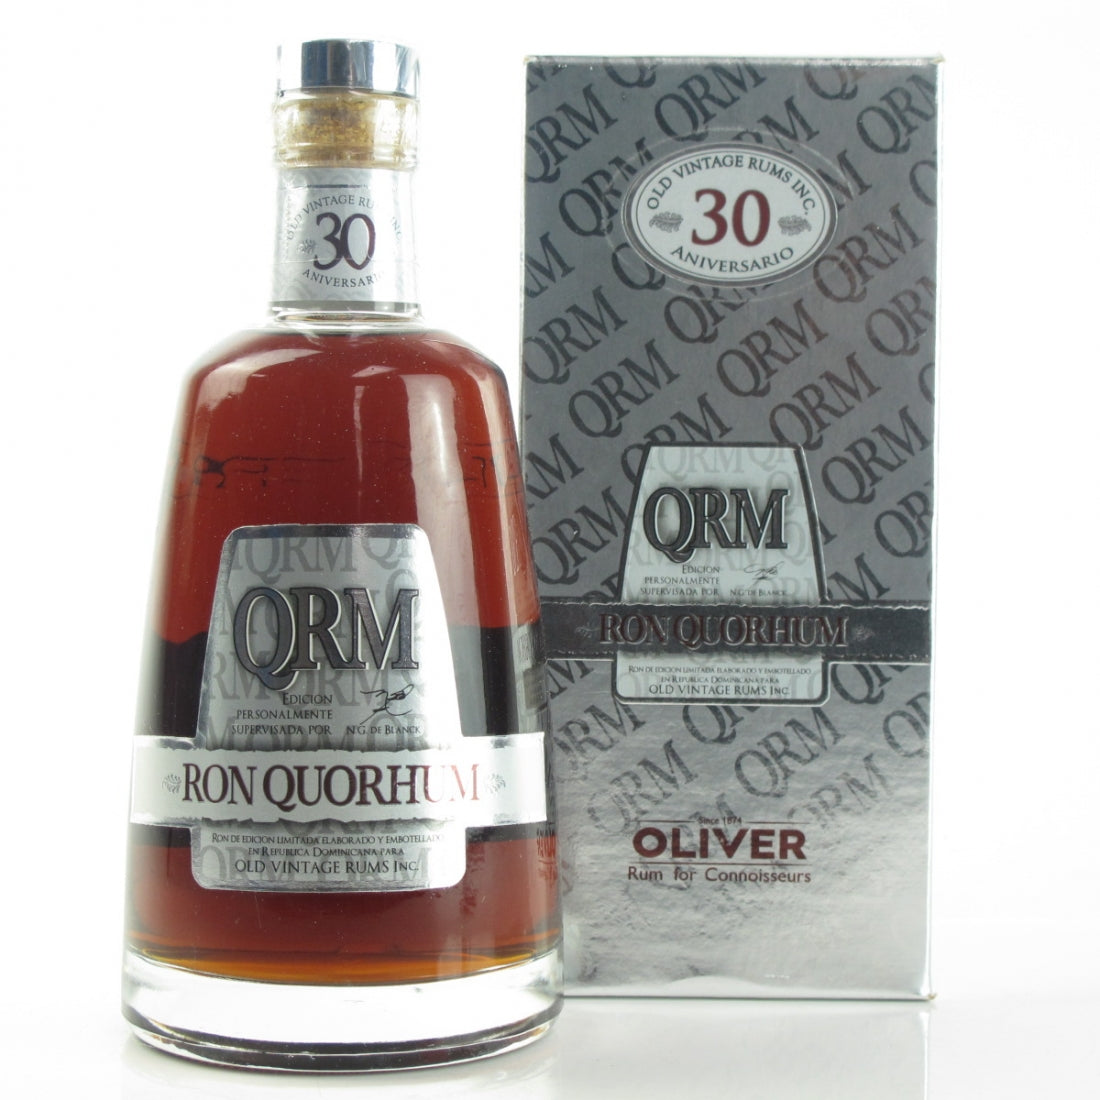 ron quorhum 30 year old qrm rum (70cl, 40%)